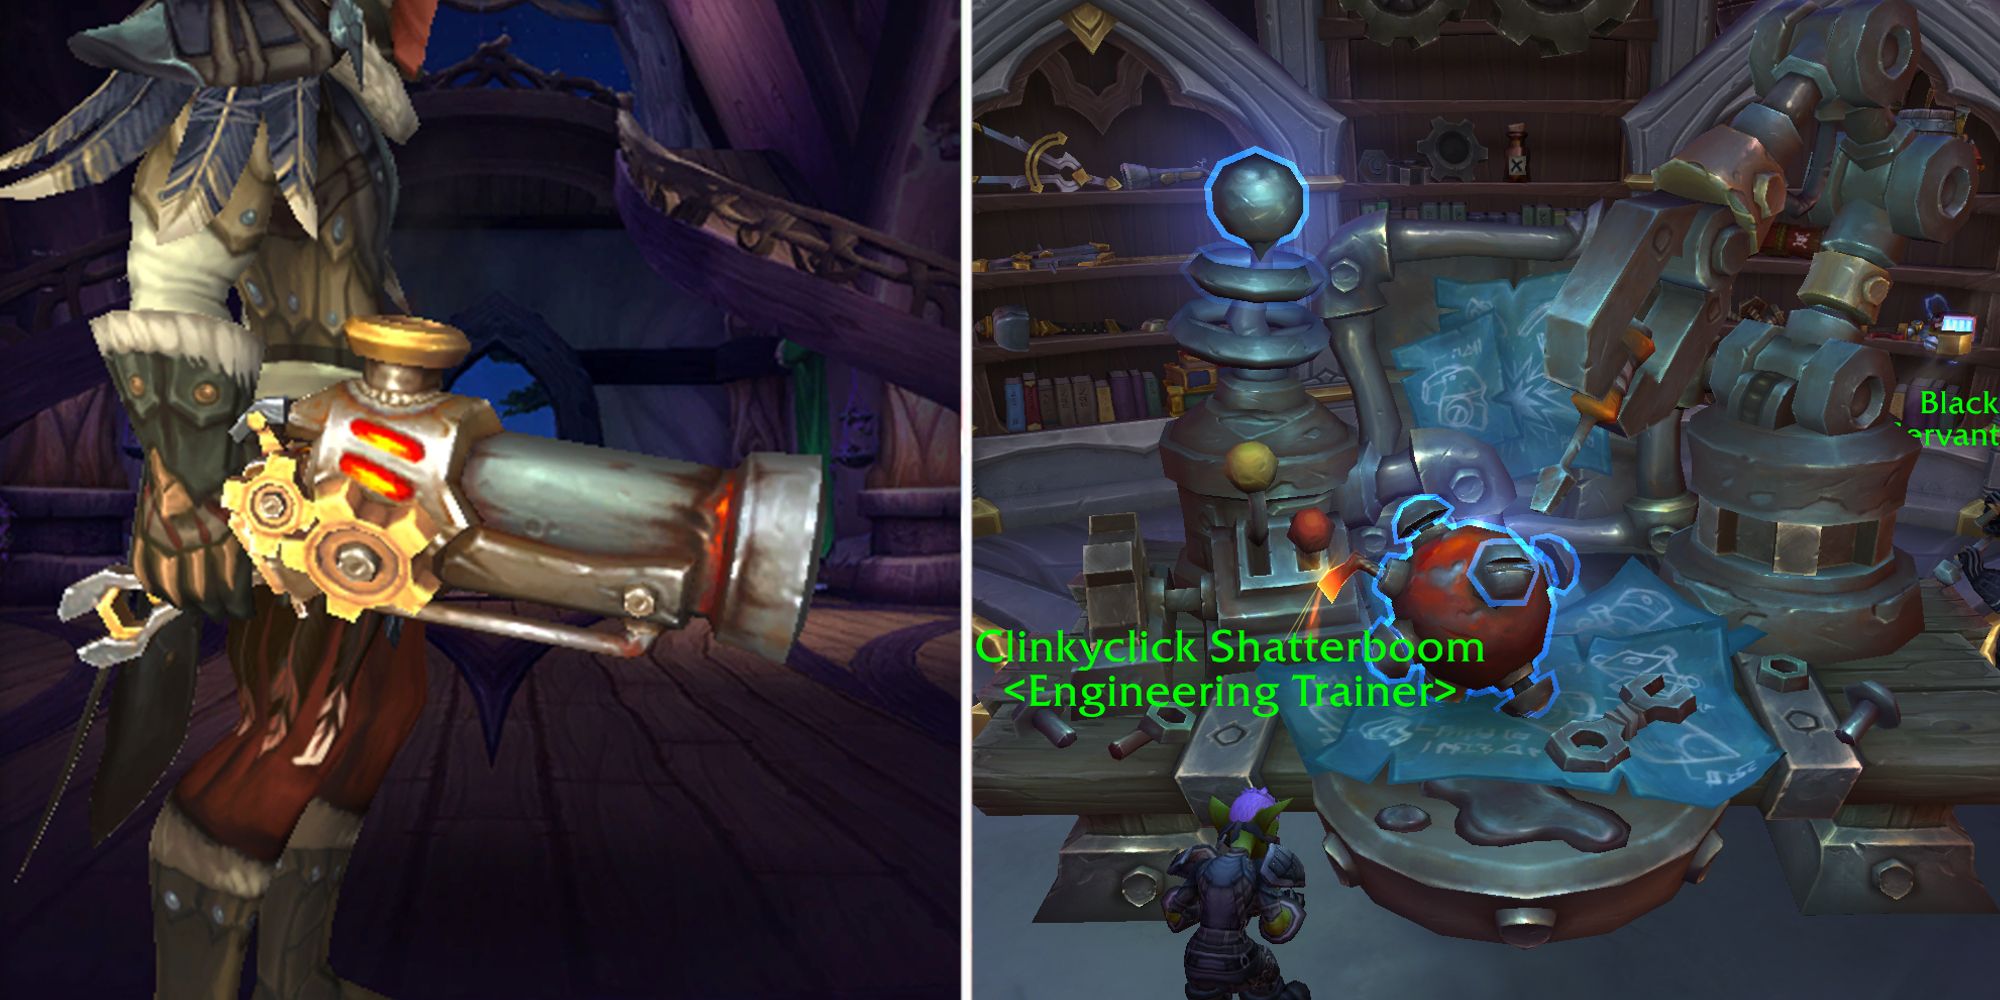 Night Elf holds ol' smoky gun next to the Engineer workbench in World of Warcraft Dragonflight